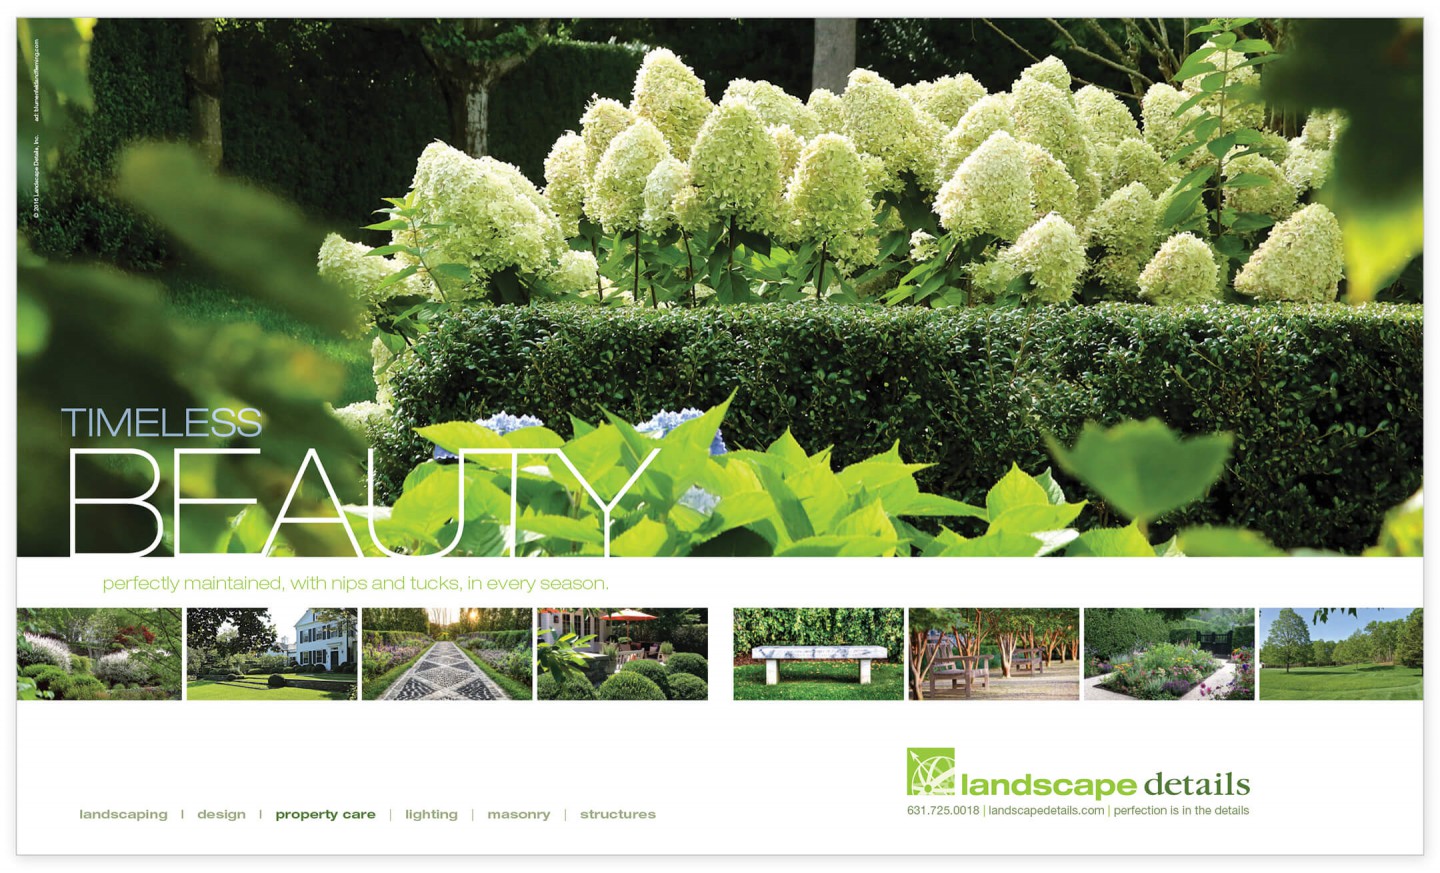 Landscape Details ad